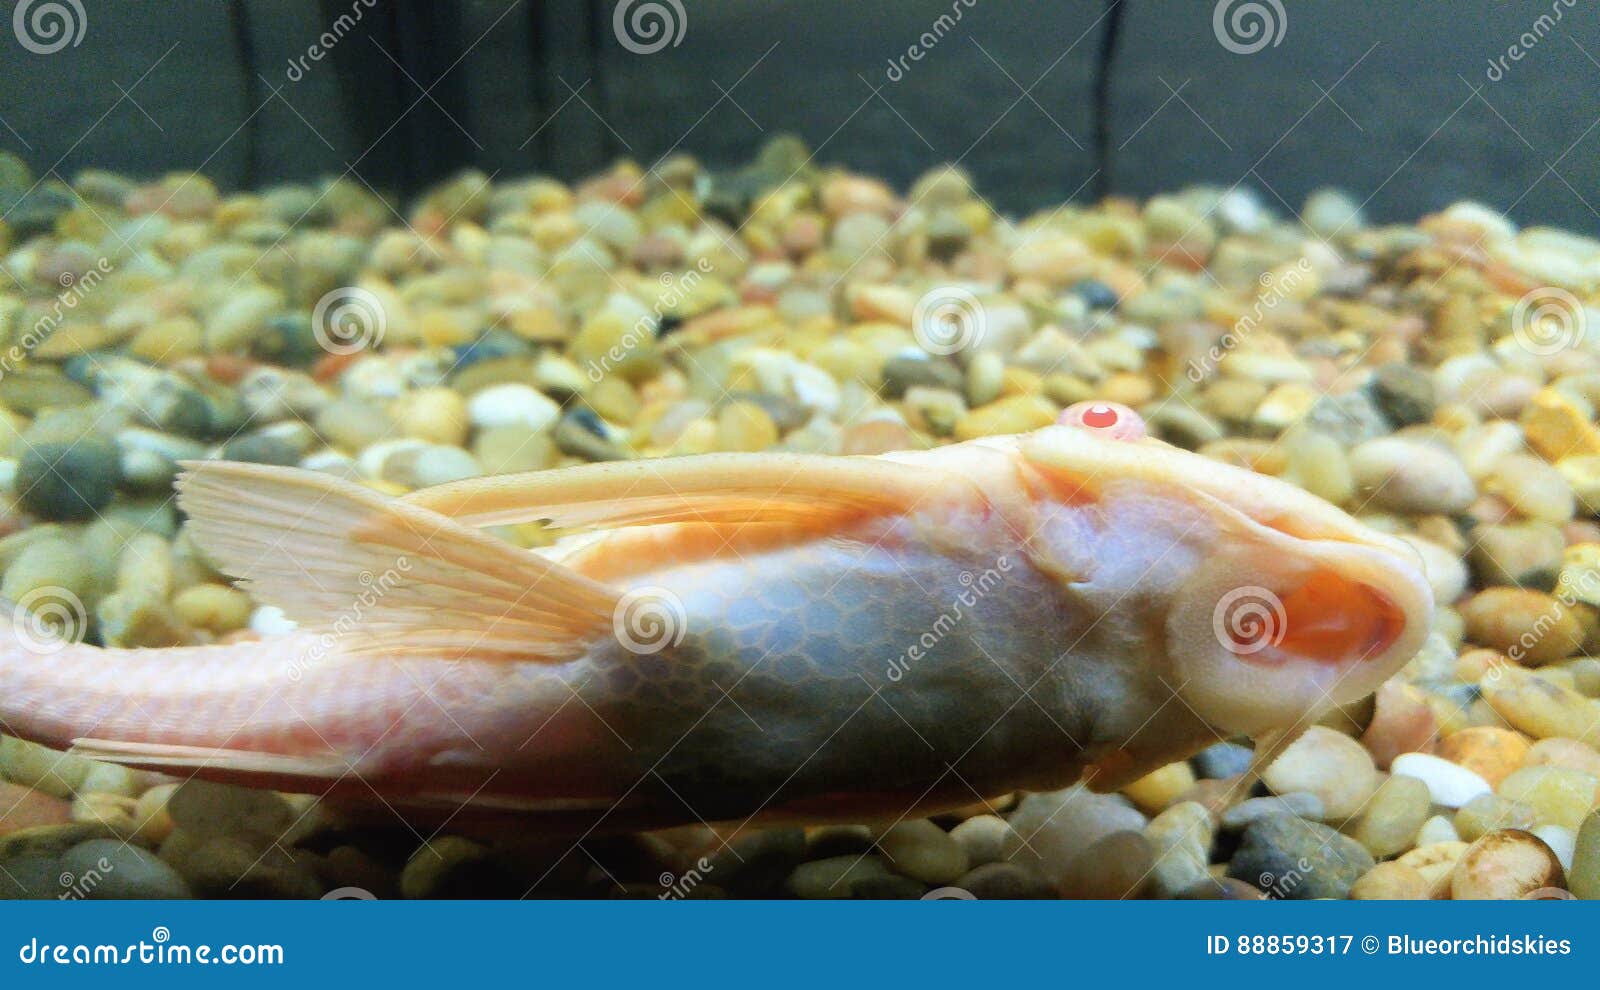 Plecostomus fish in tank stock image. Image of swimming - 88859317